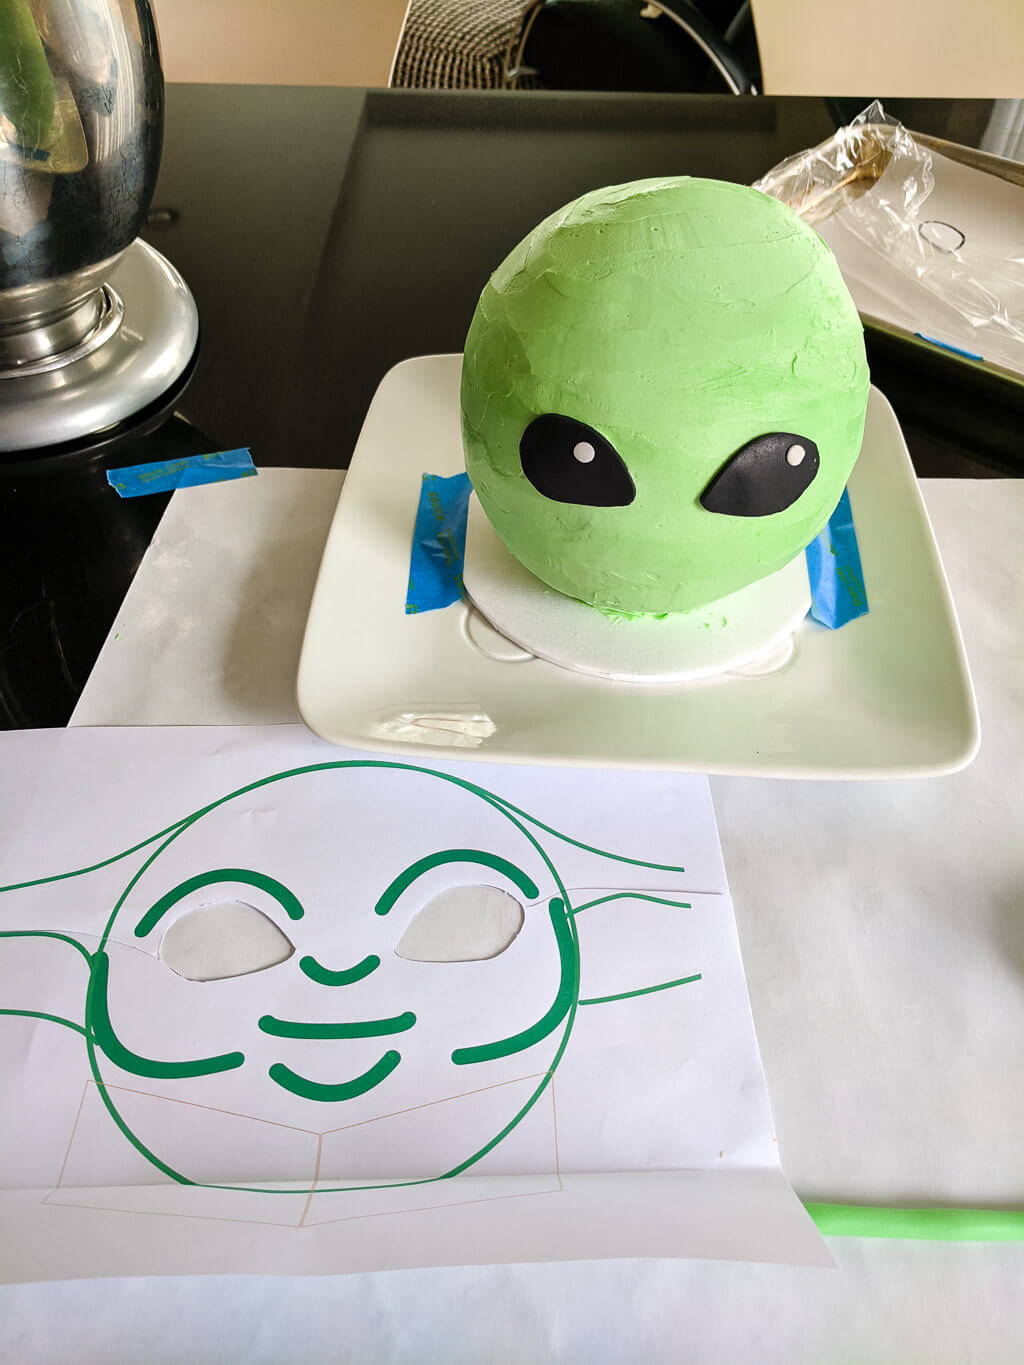 DIY Baby Yoda cake with fondant eyes